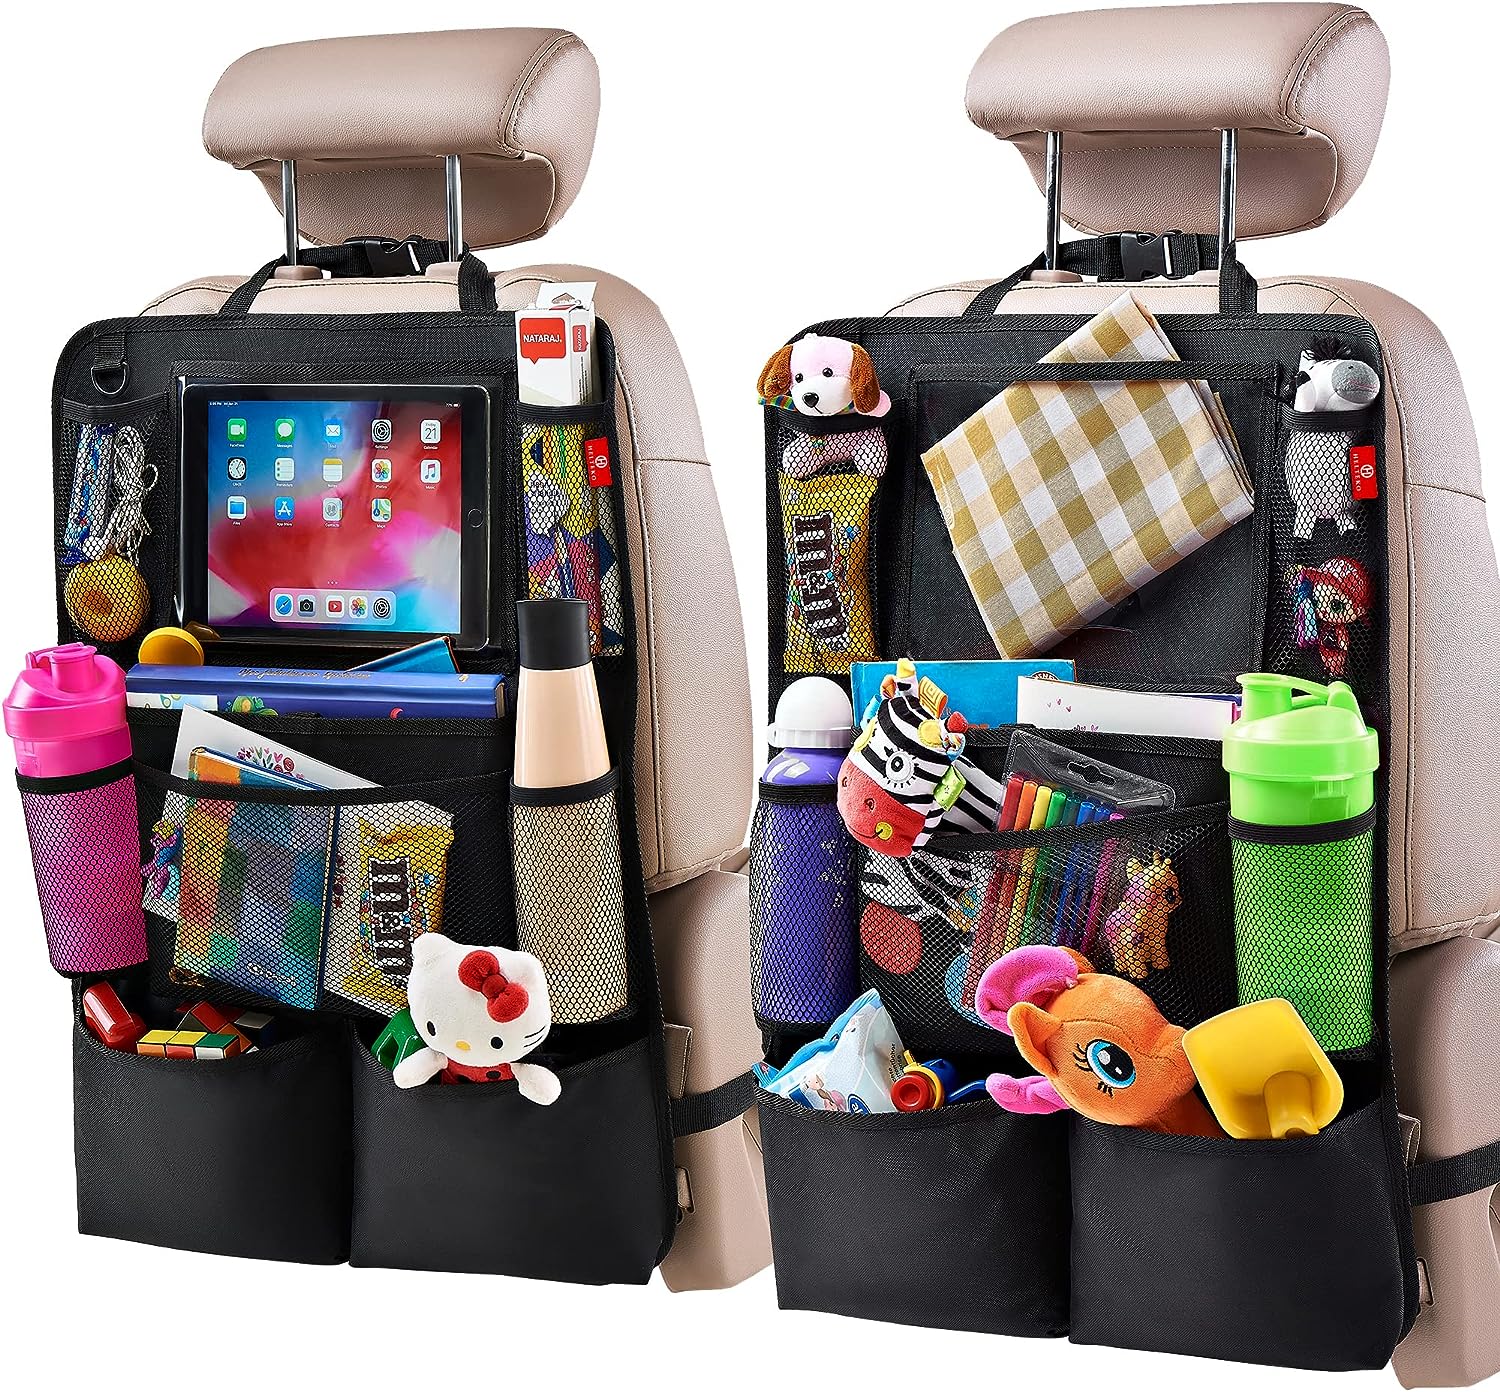 Helteko Car Backseat Organizer with Touch Screen Tablet Holder, Kick Mats  Protector, 9 Pockets, 2 Pack, Black 